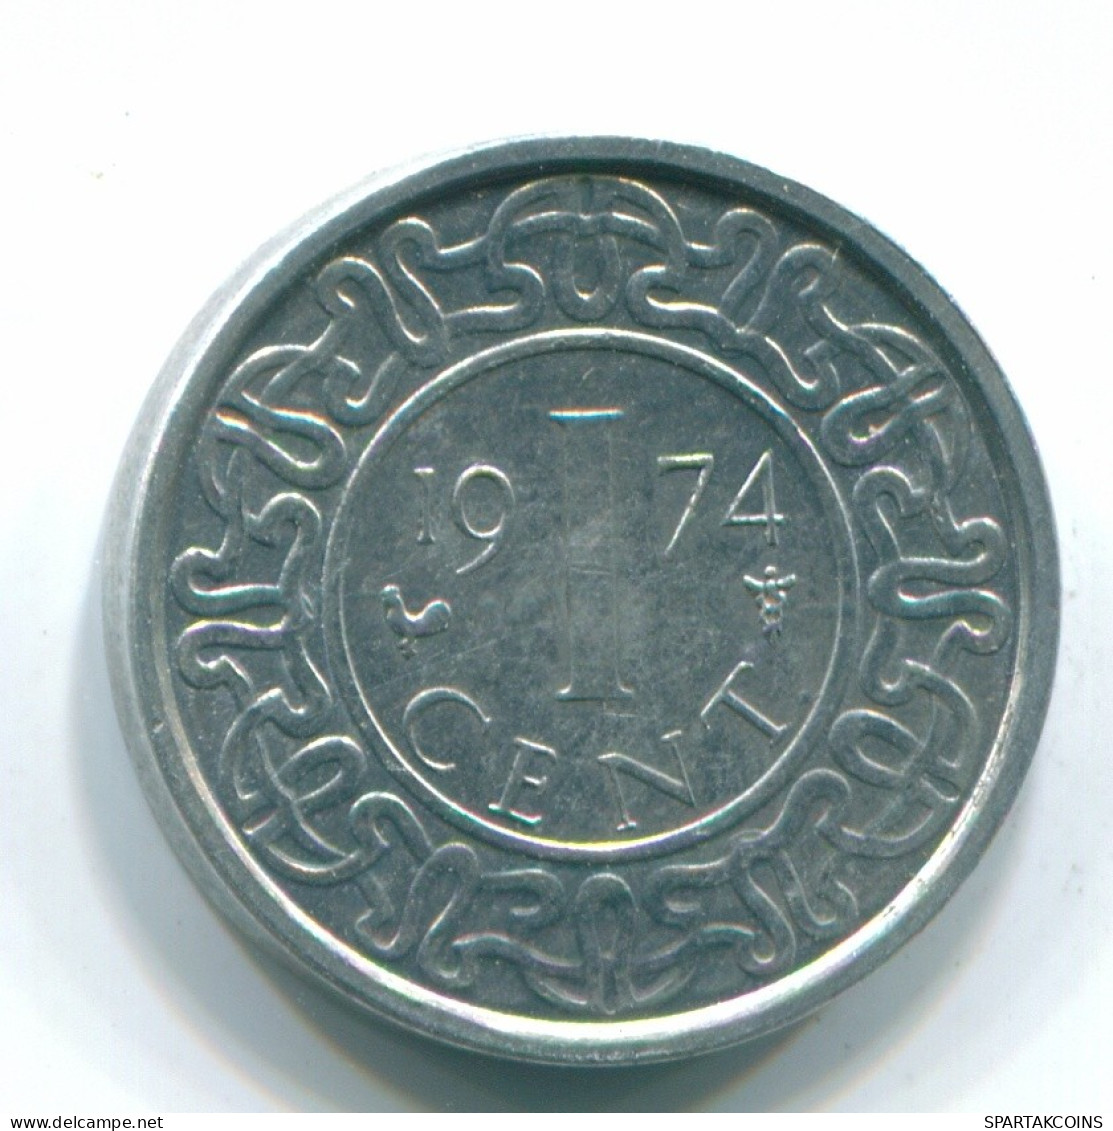 1 CENT 1974 SURINAME NEERLANDÉS NETHERLANDS Aluminium Colonial Moneda #S11384.E.A - Suriname 1975 - ...